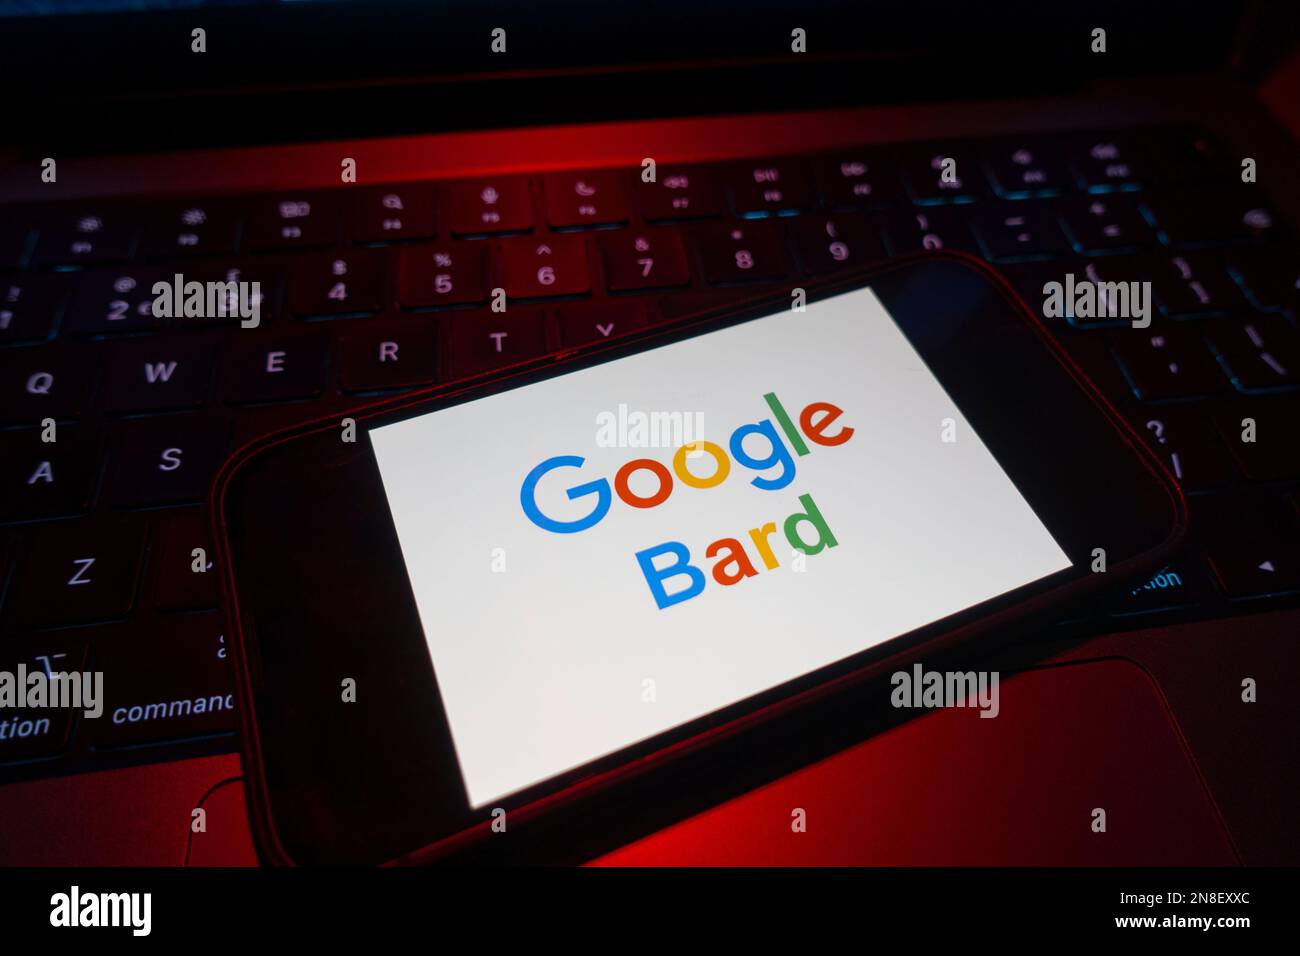 Digital composite of Google Bard AI chatbot logo on phone screen Stock Photo